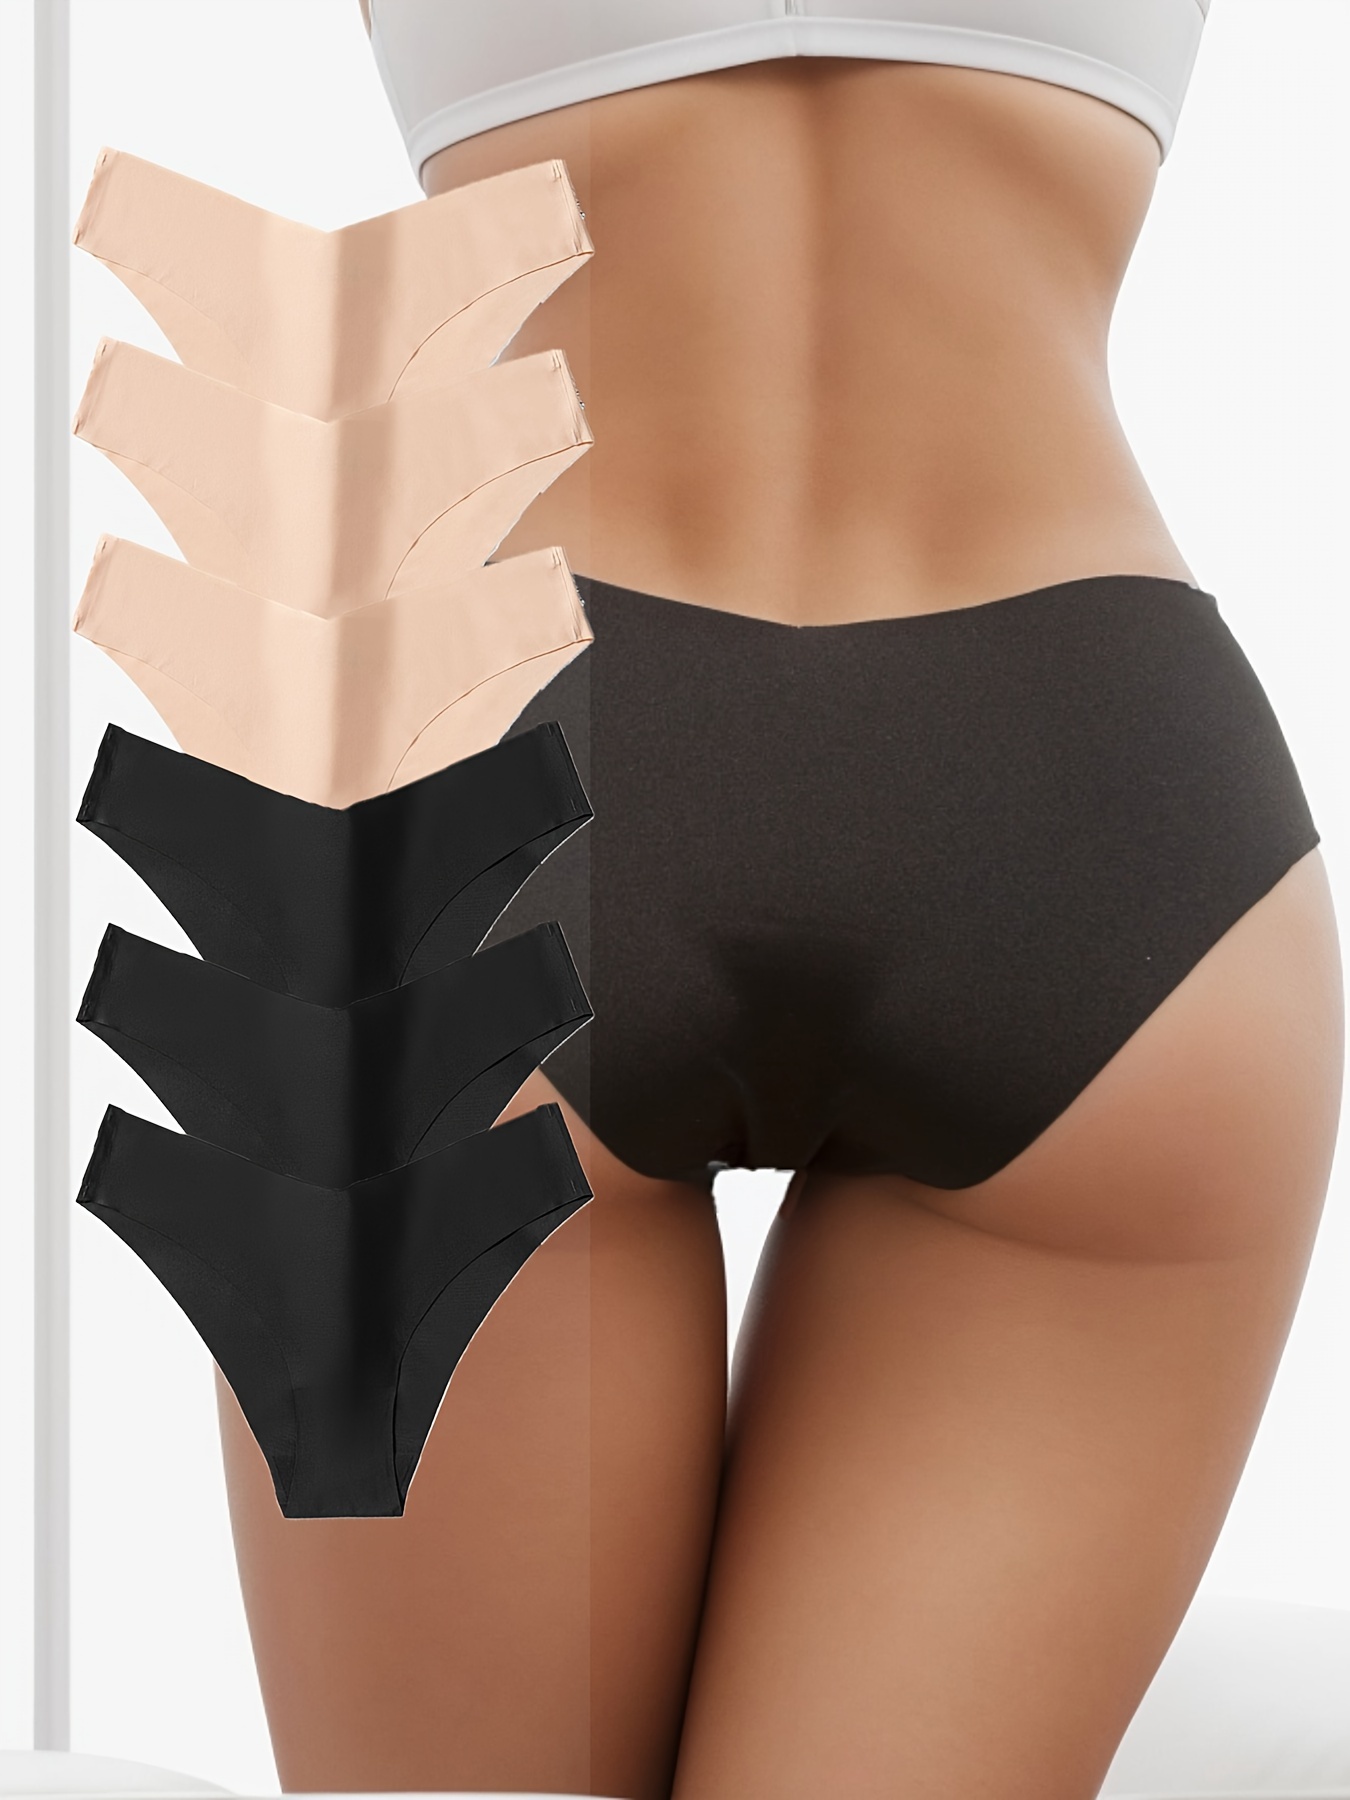 6 Pcs Simple Panties, Solid Color Seamless Comfy Intimates Briefs, Women's  Lingerie & Underwear